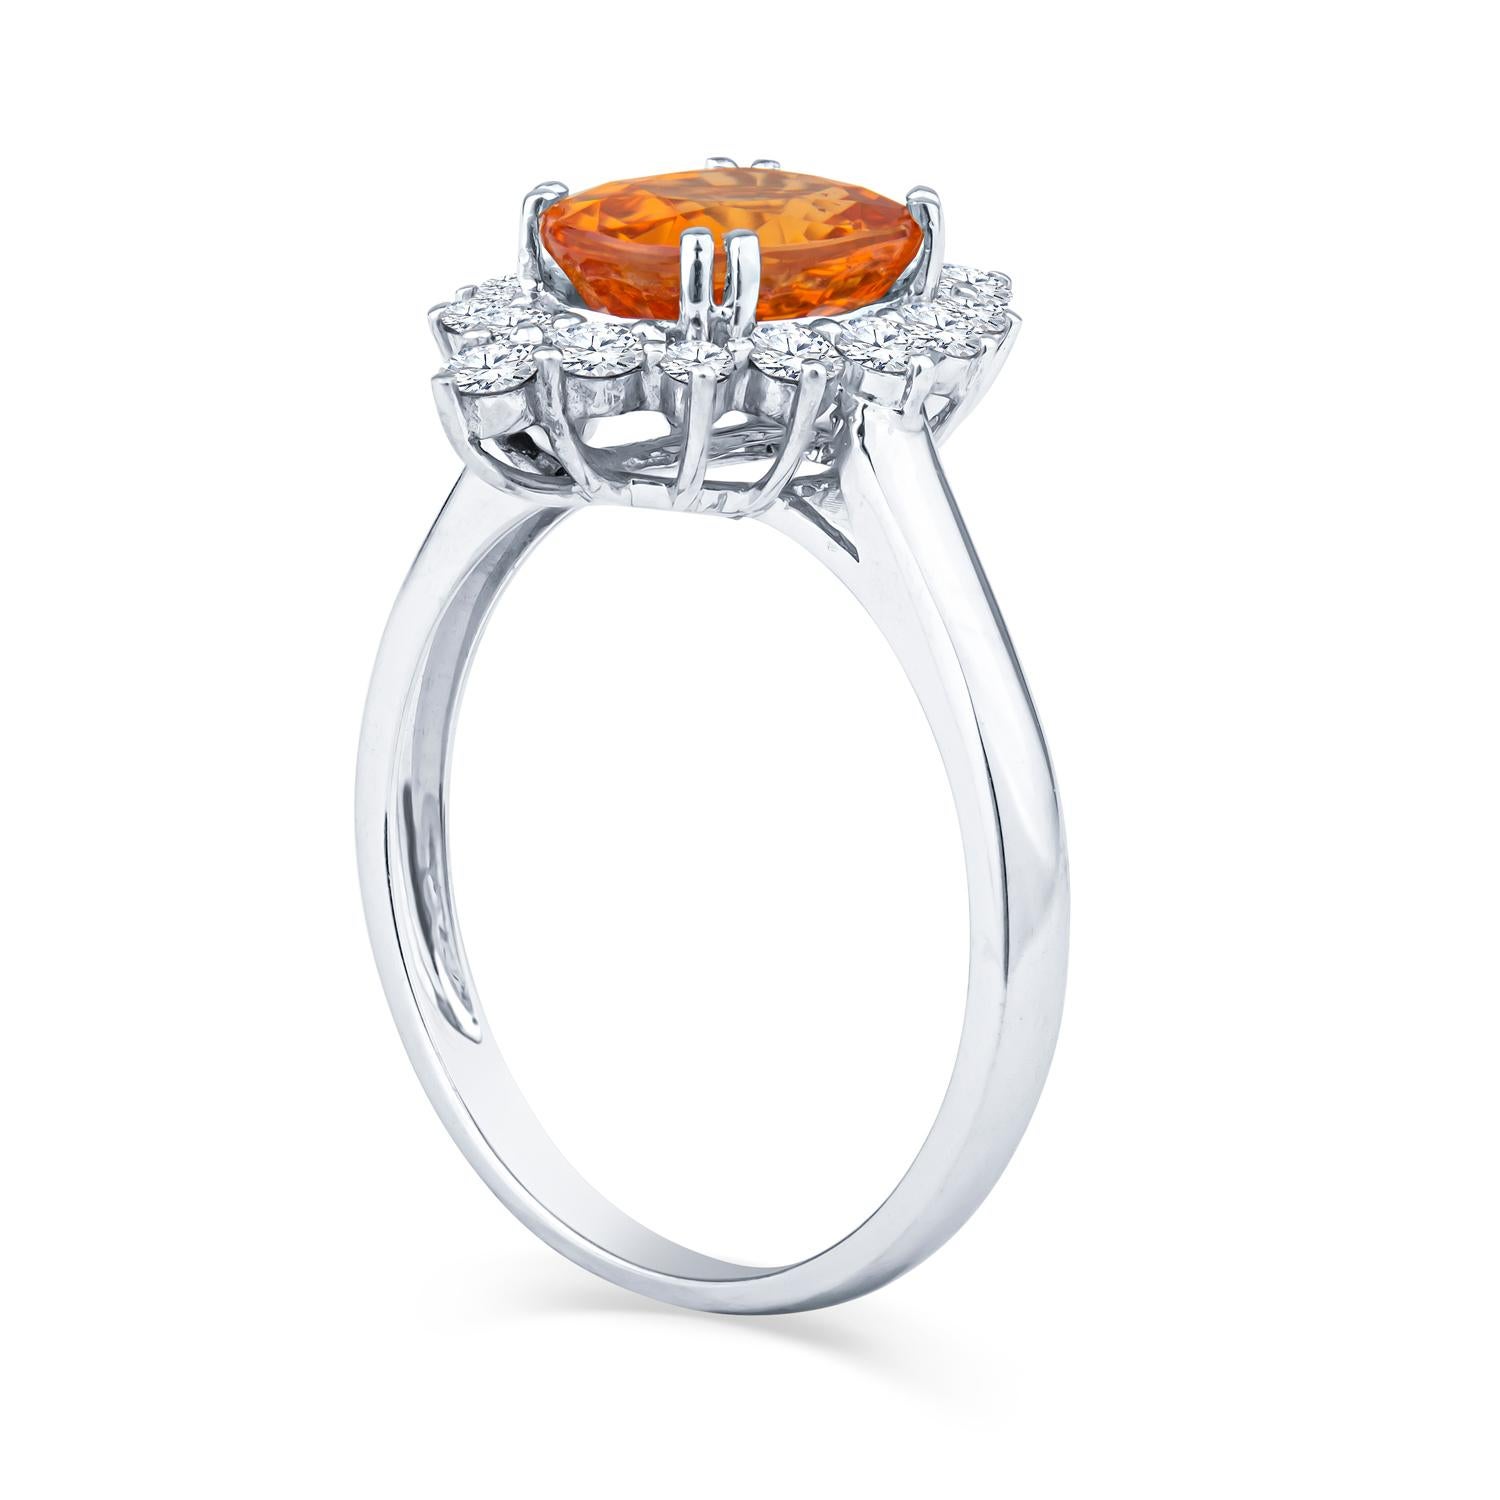 Oval Cut 2.68 Carat Fine Orange Spessartine Oval Gem Quality Garnet and Diamond Halo Ring For Sale